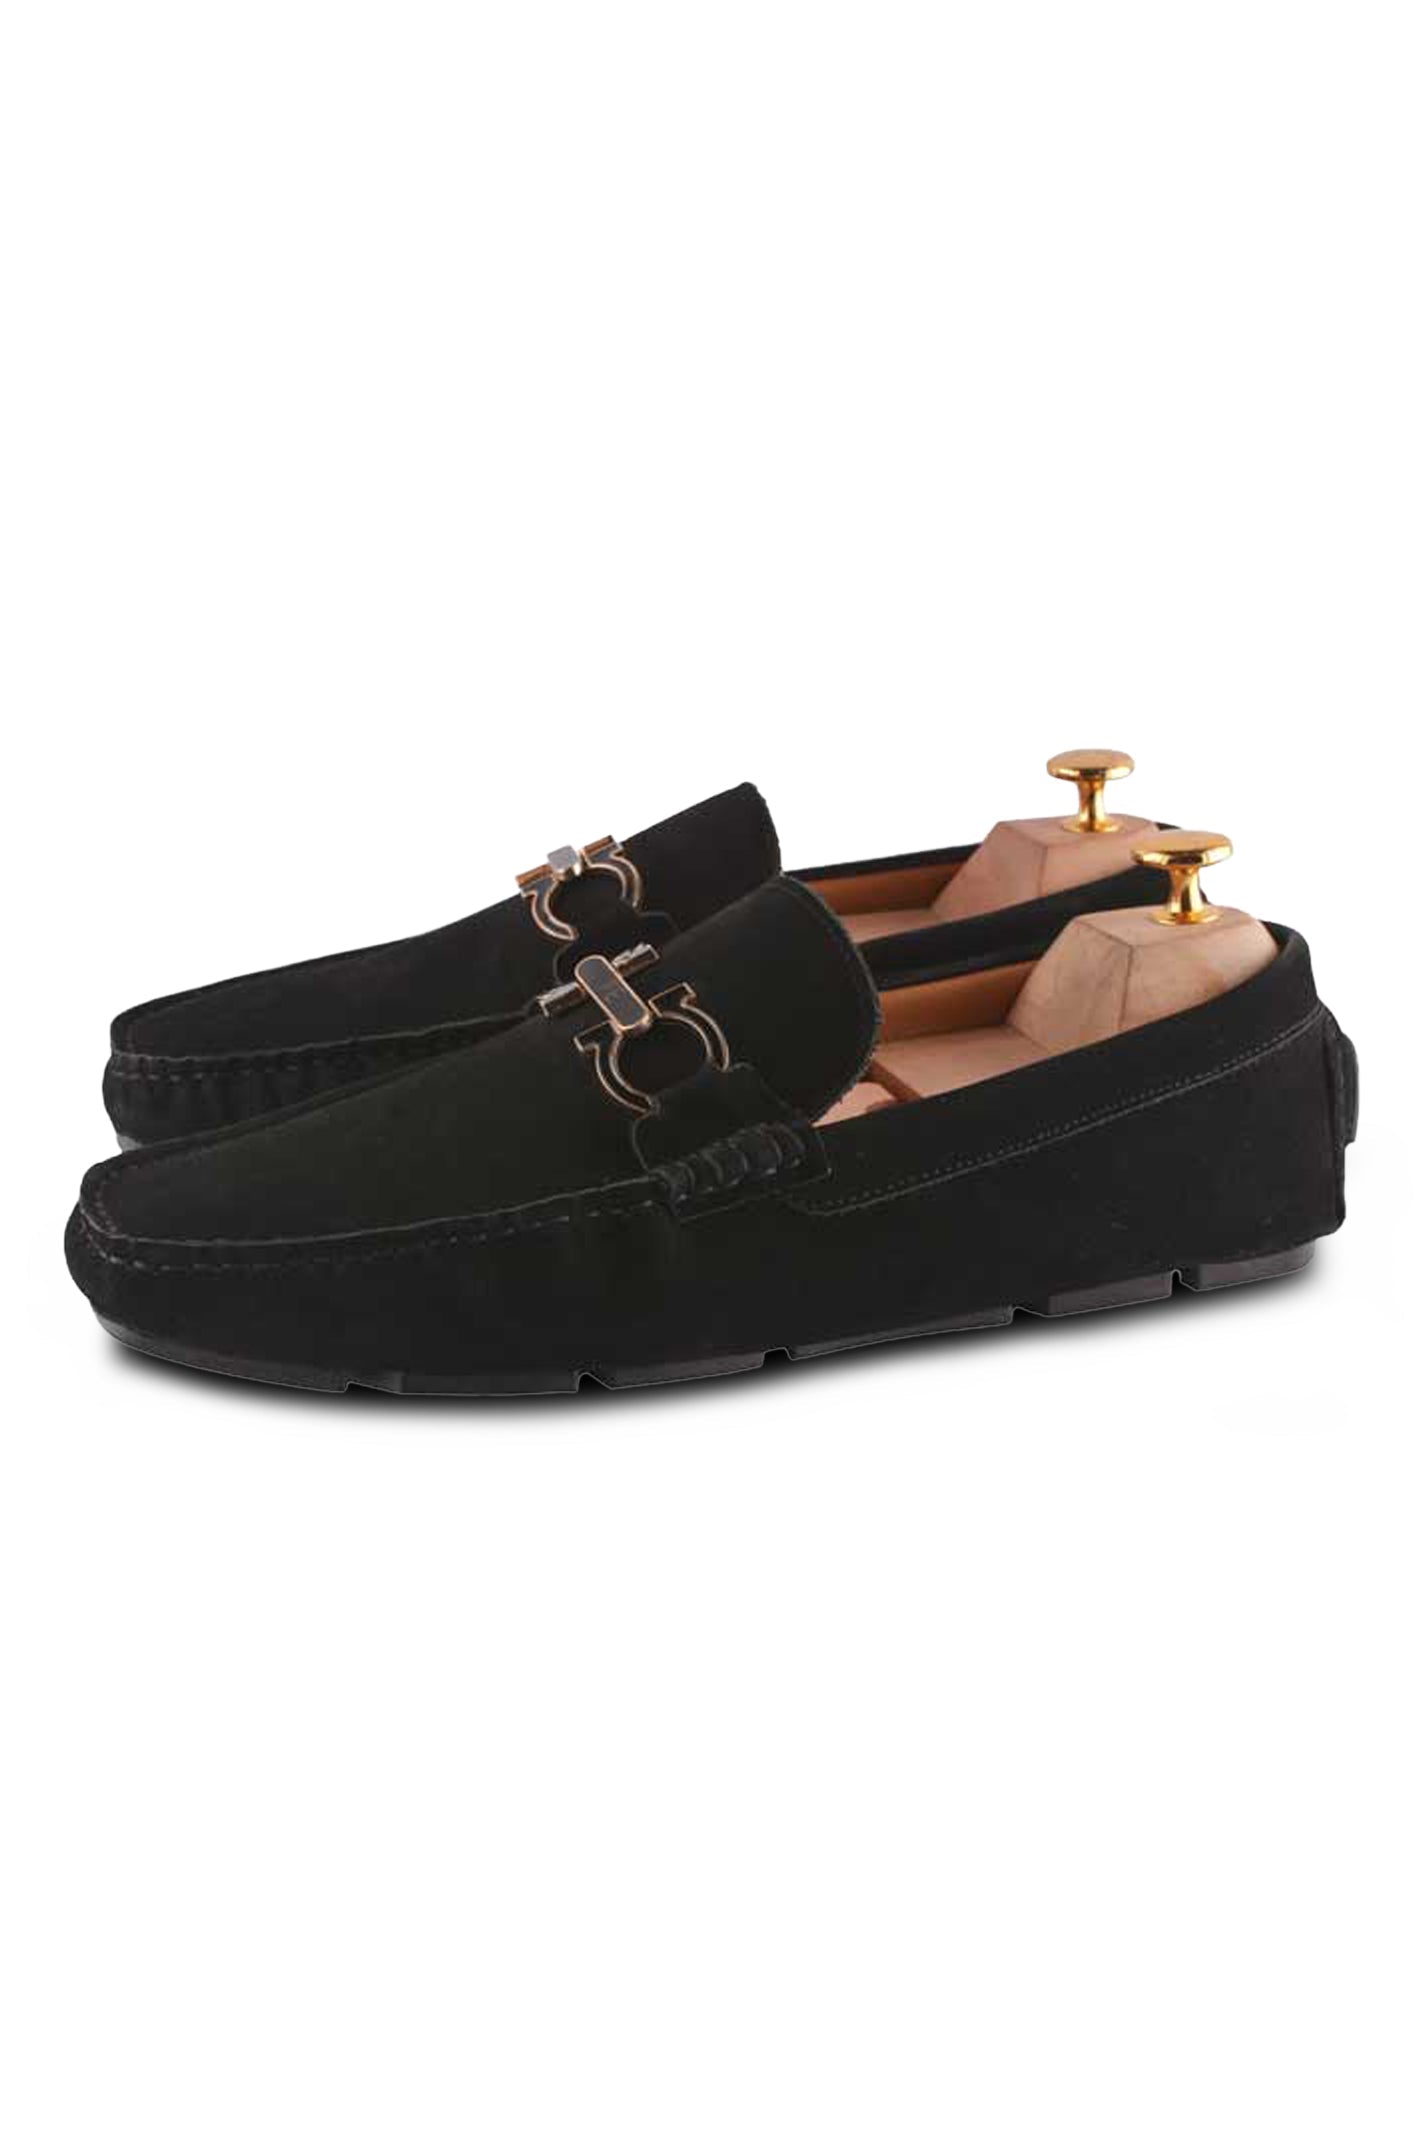 Casual Shoes For Men in Black SKU: SMC0013-BLACK - Diners